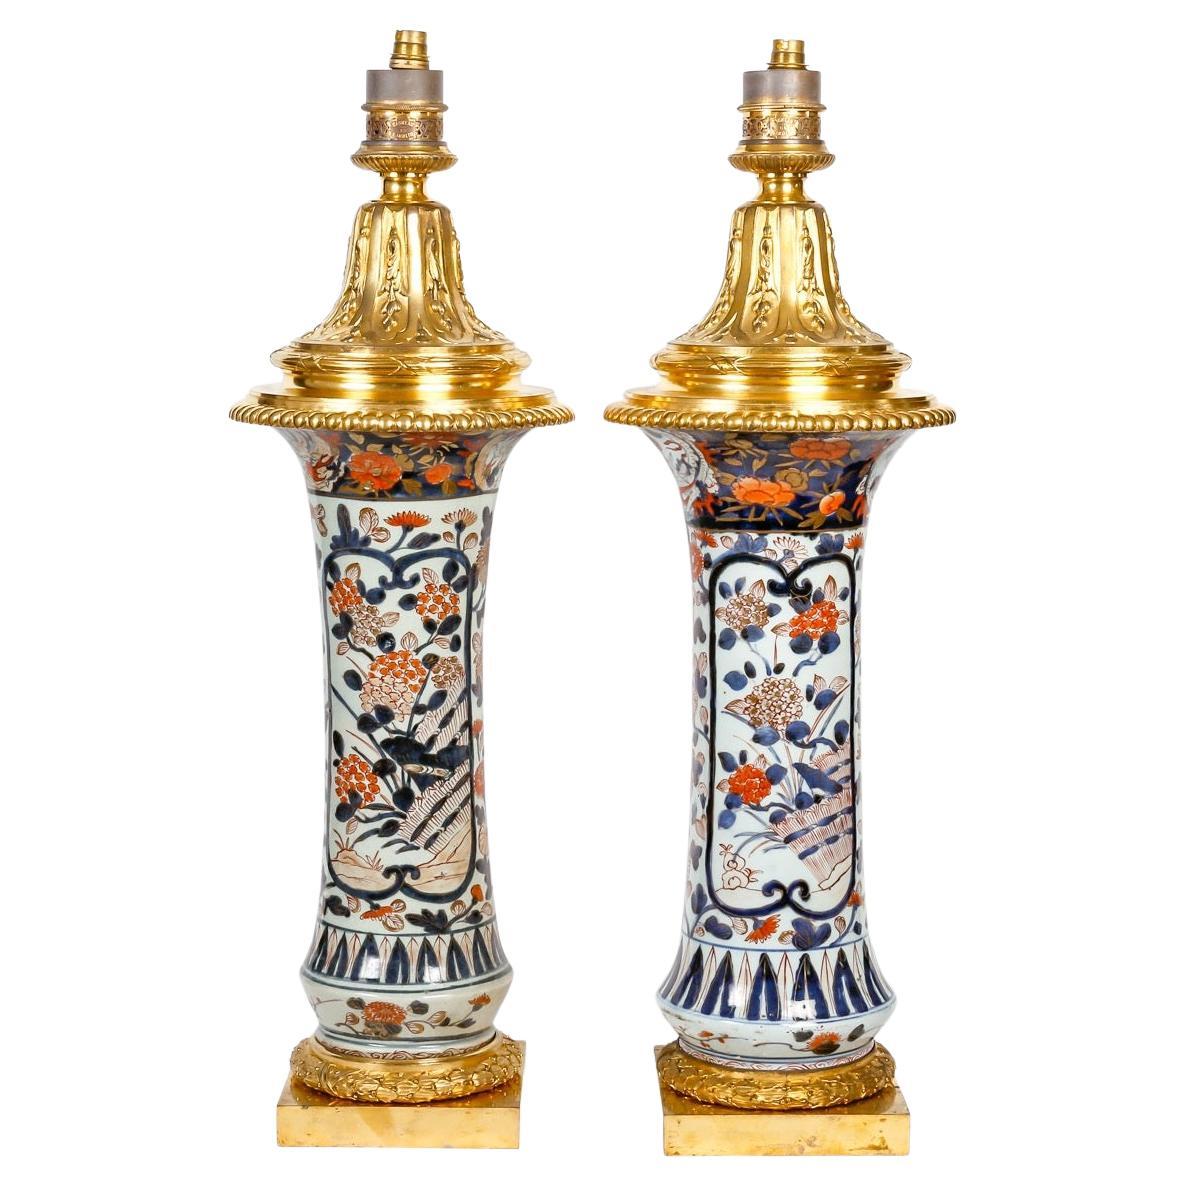 Pair of Porcelain Vases Ormolu-Mounted in Lamps by Gagneau Paris  XIXth Century